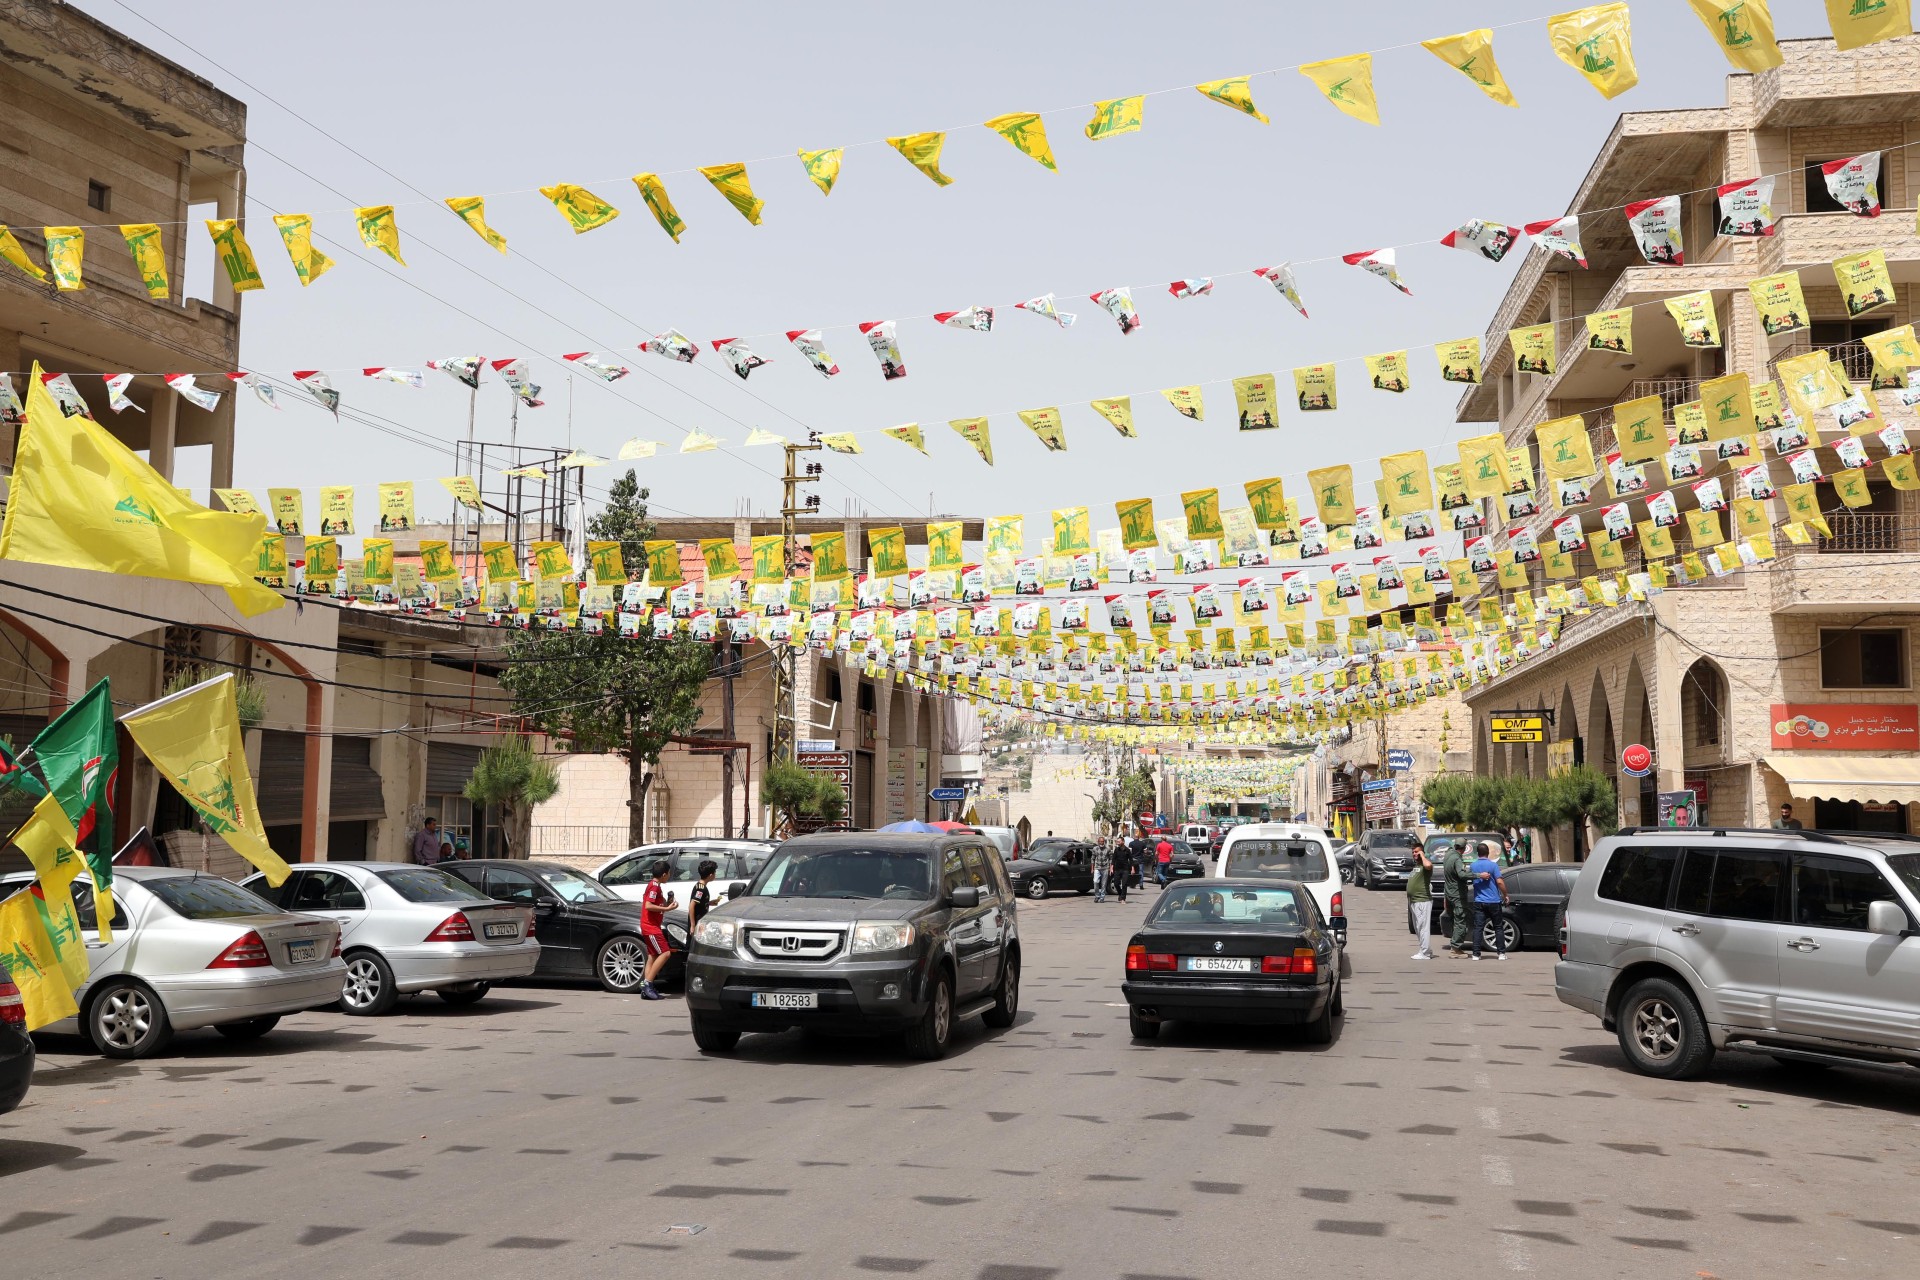 Hezbollah flags are seen strung across the road in Bint Jbeil (MEE/Hassan Shaaban)